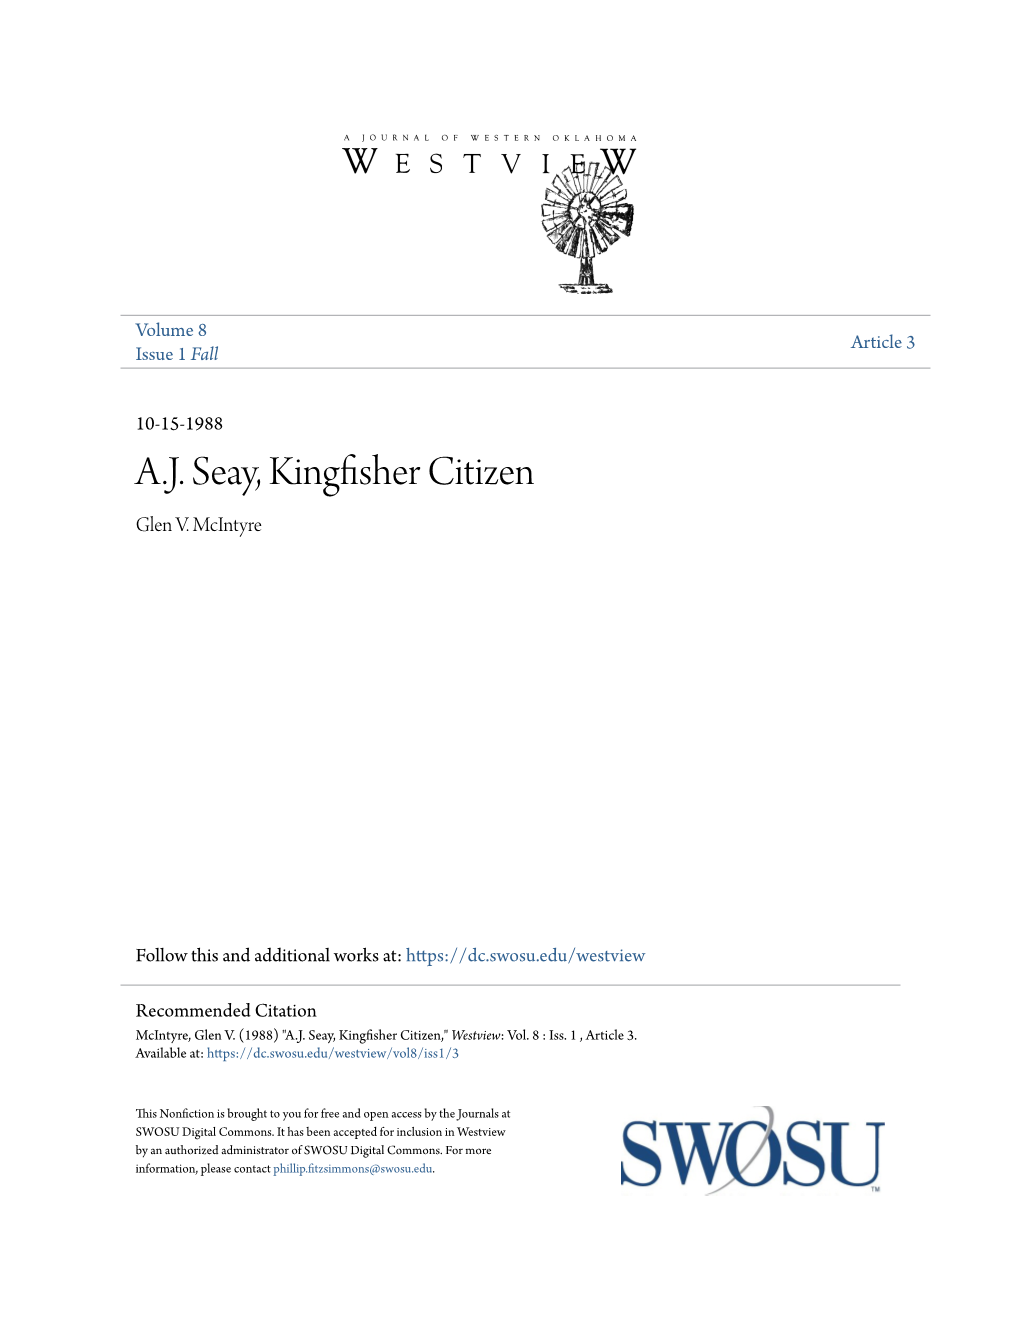 A.J. Seay, Kingfisher Citizen Glen V